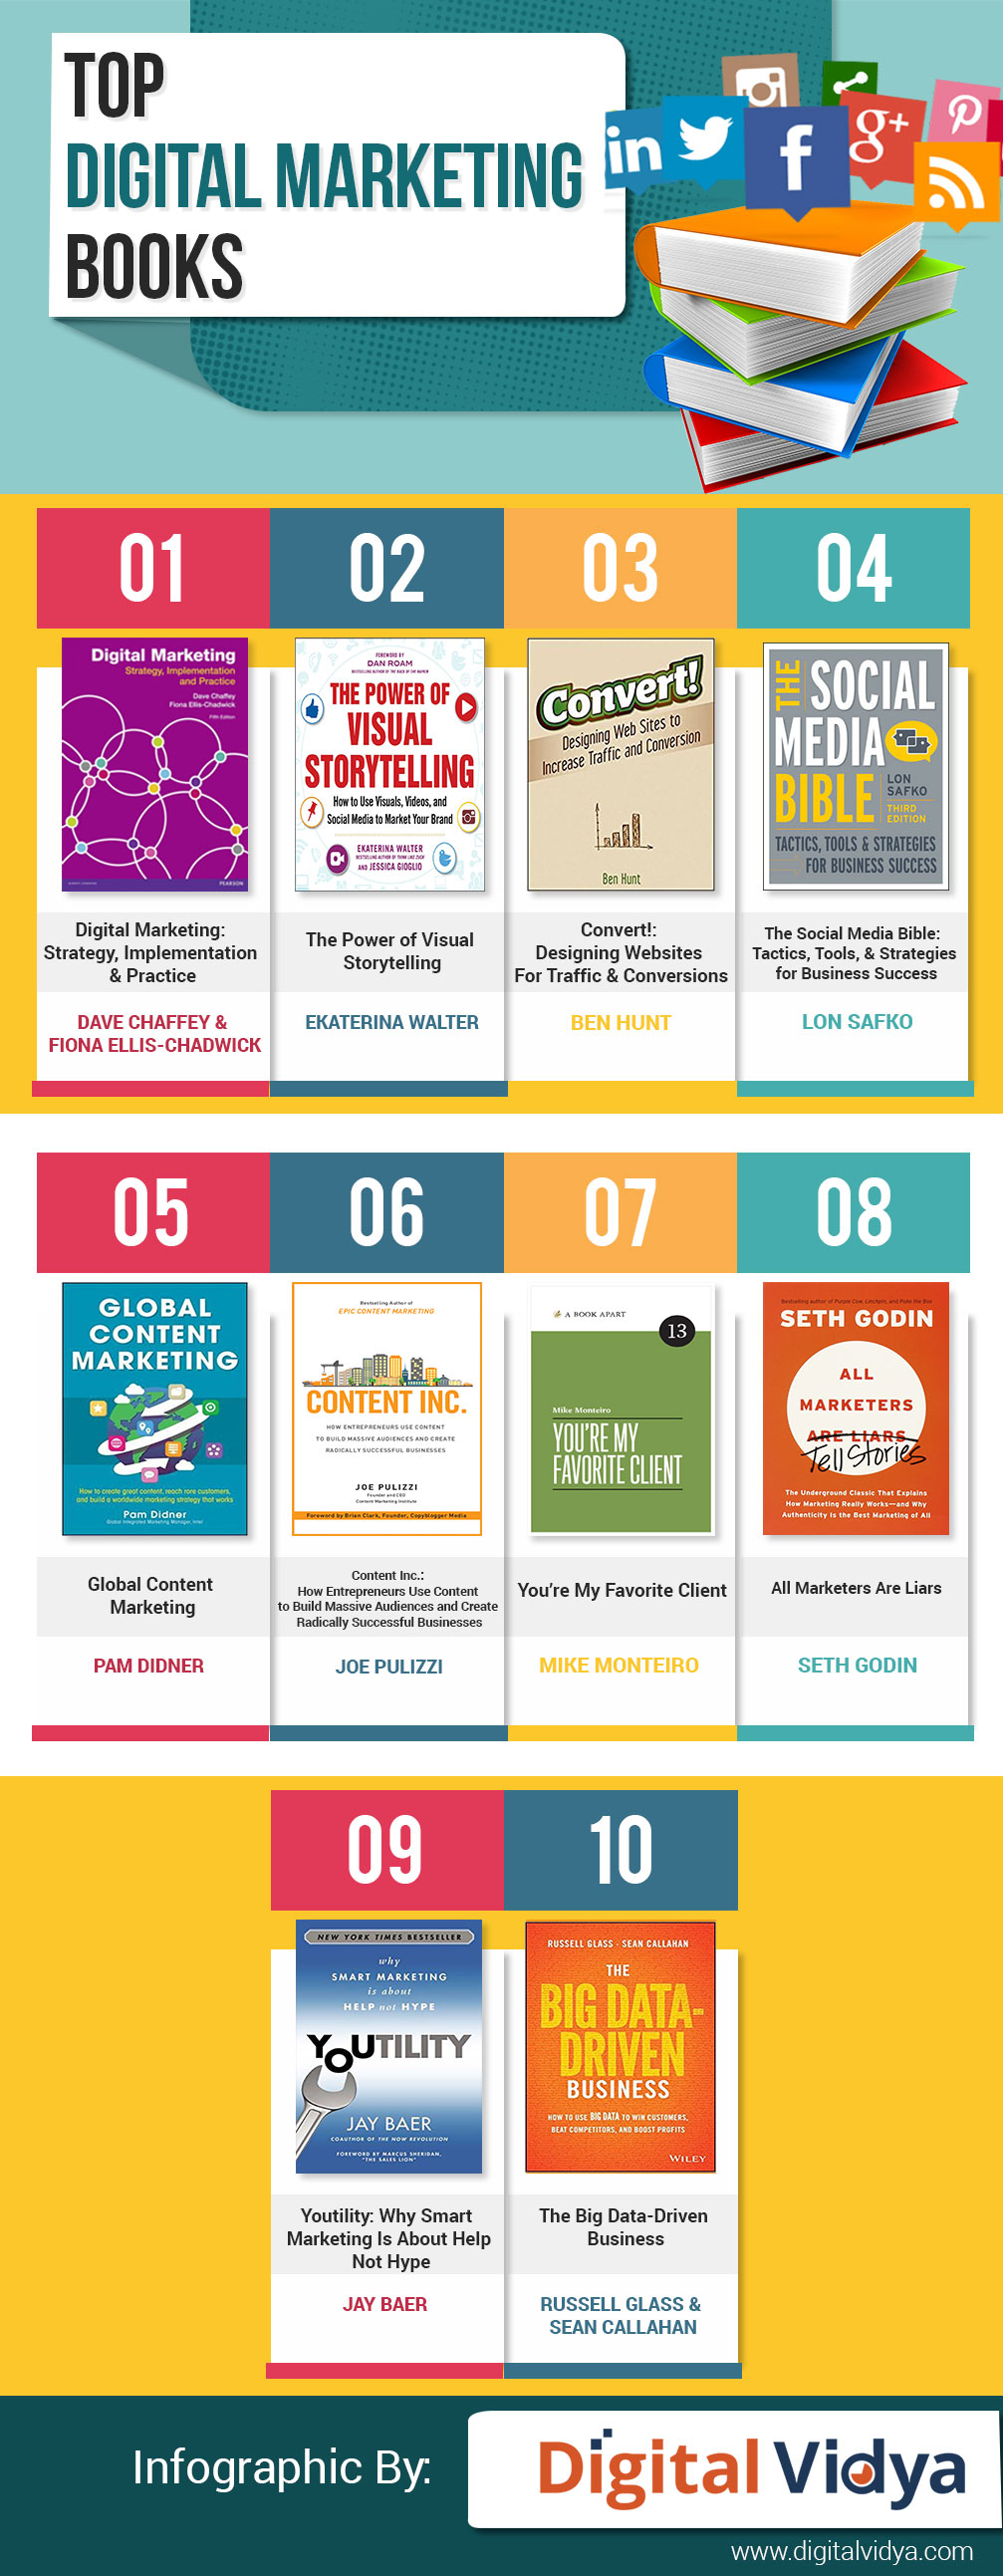 Top digital marketing books